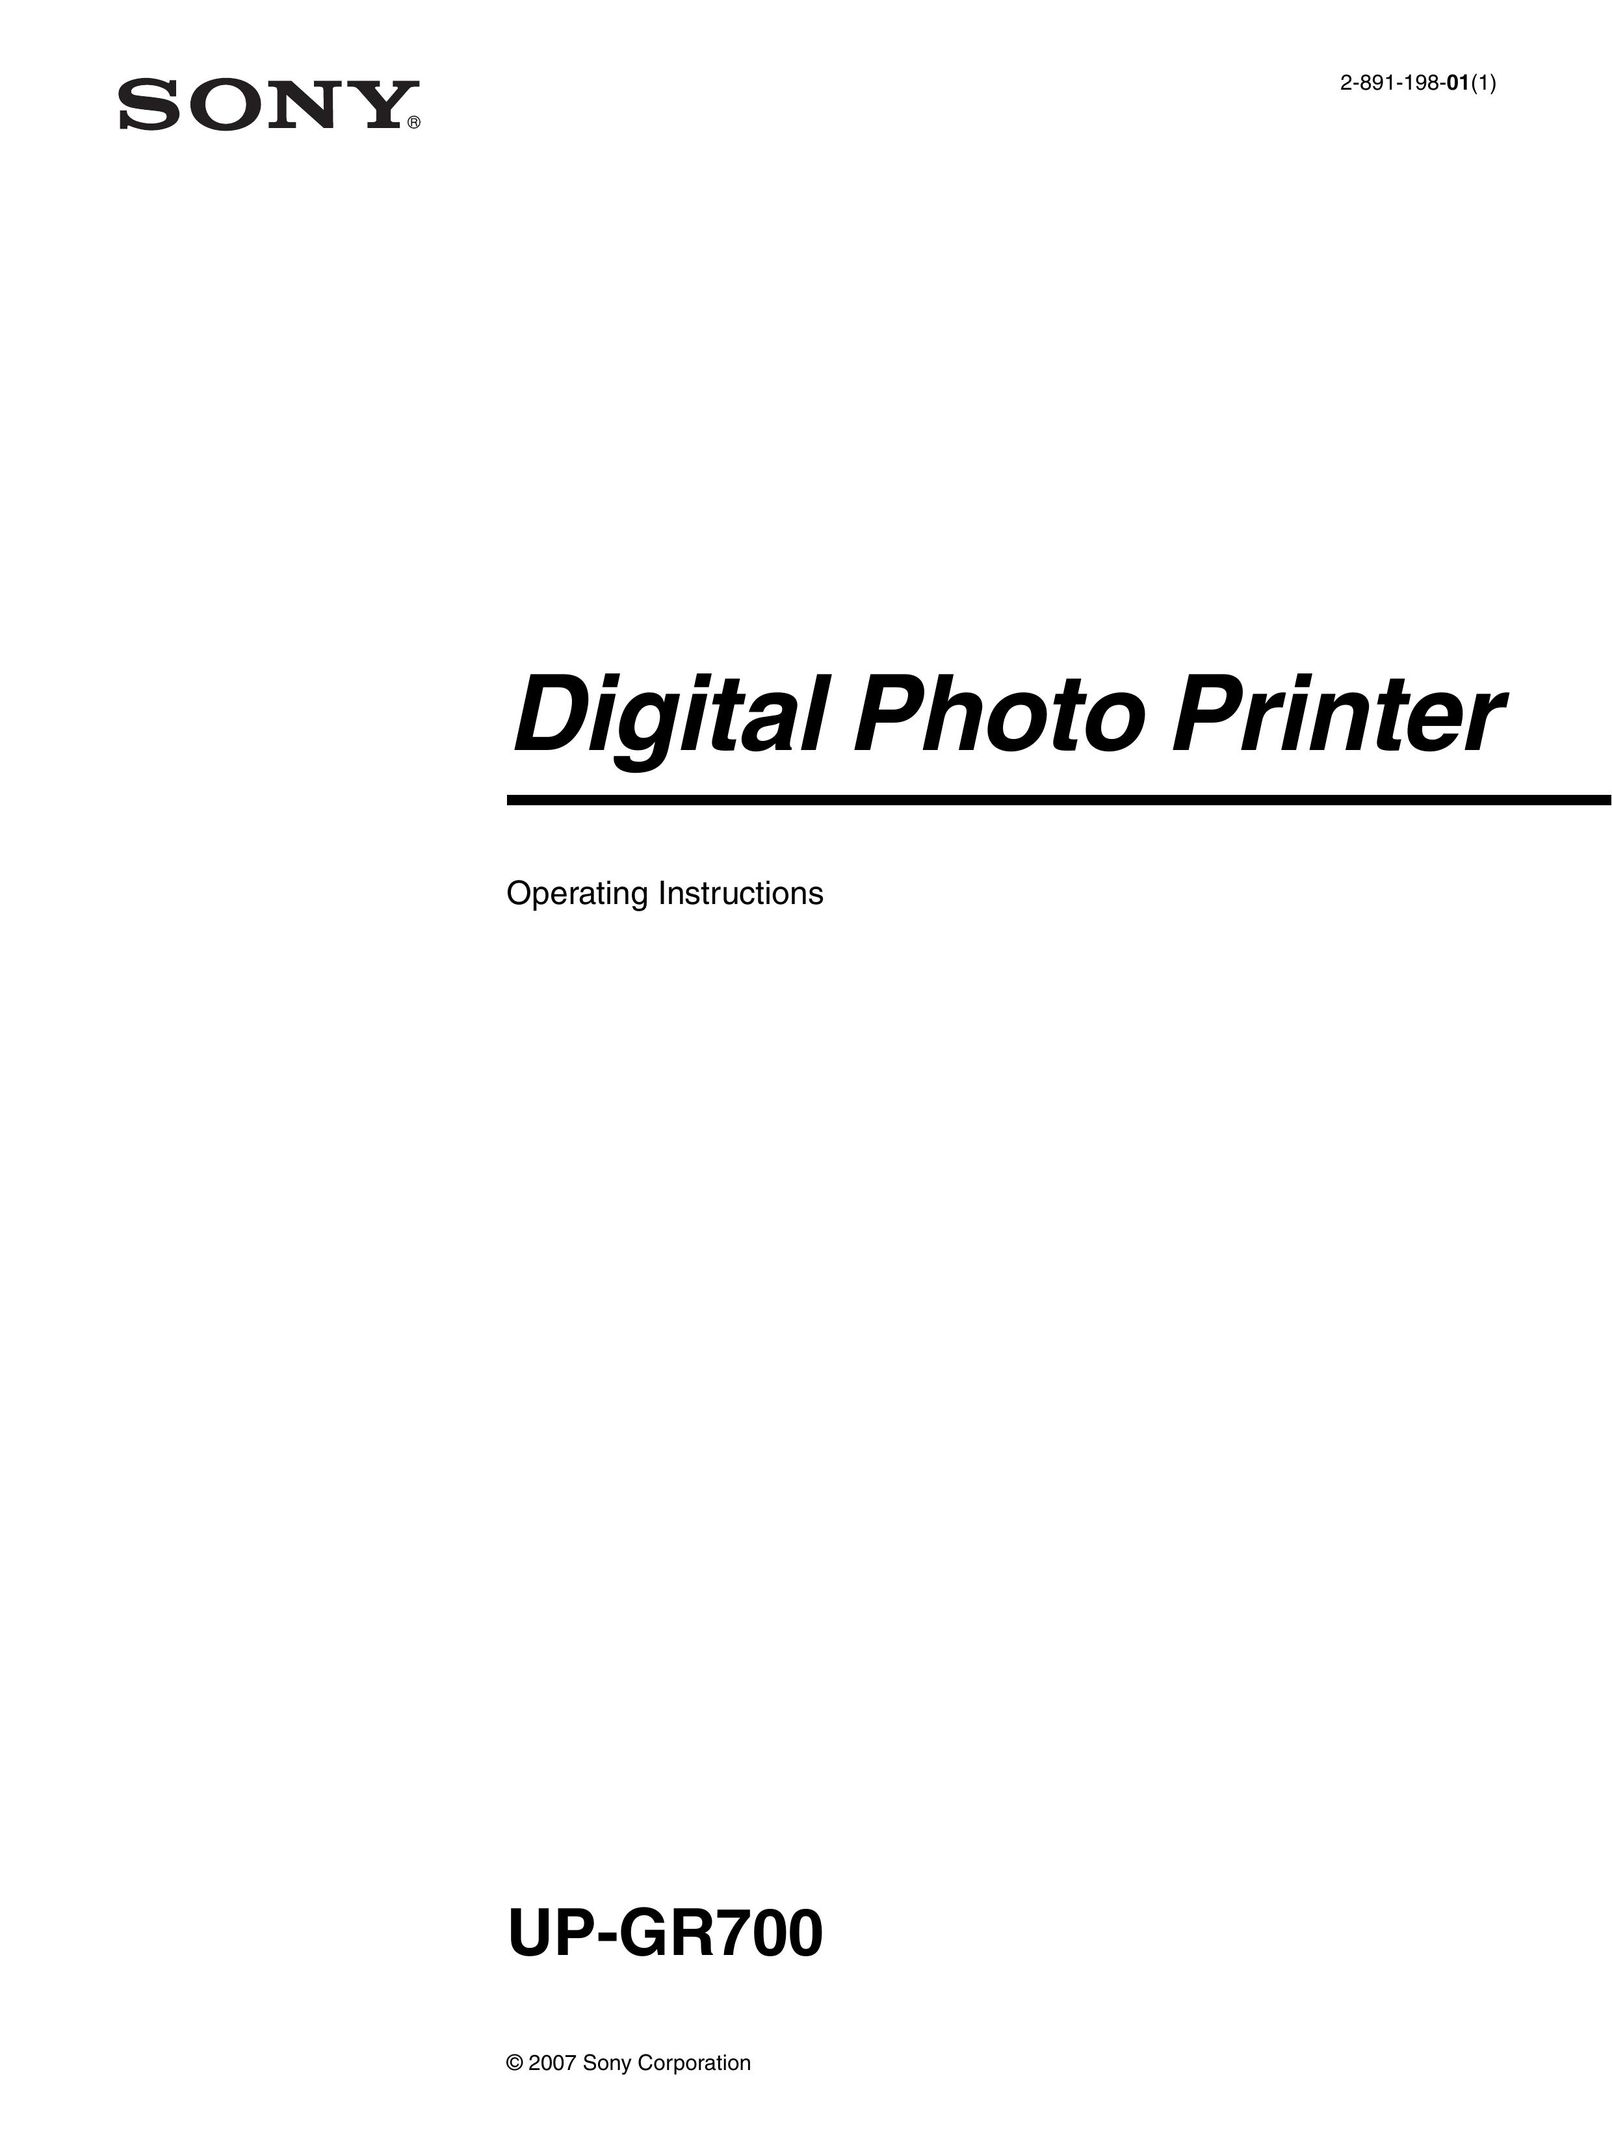 Sony UP-GR700 Printer User Manual